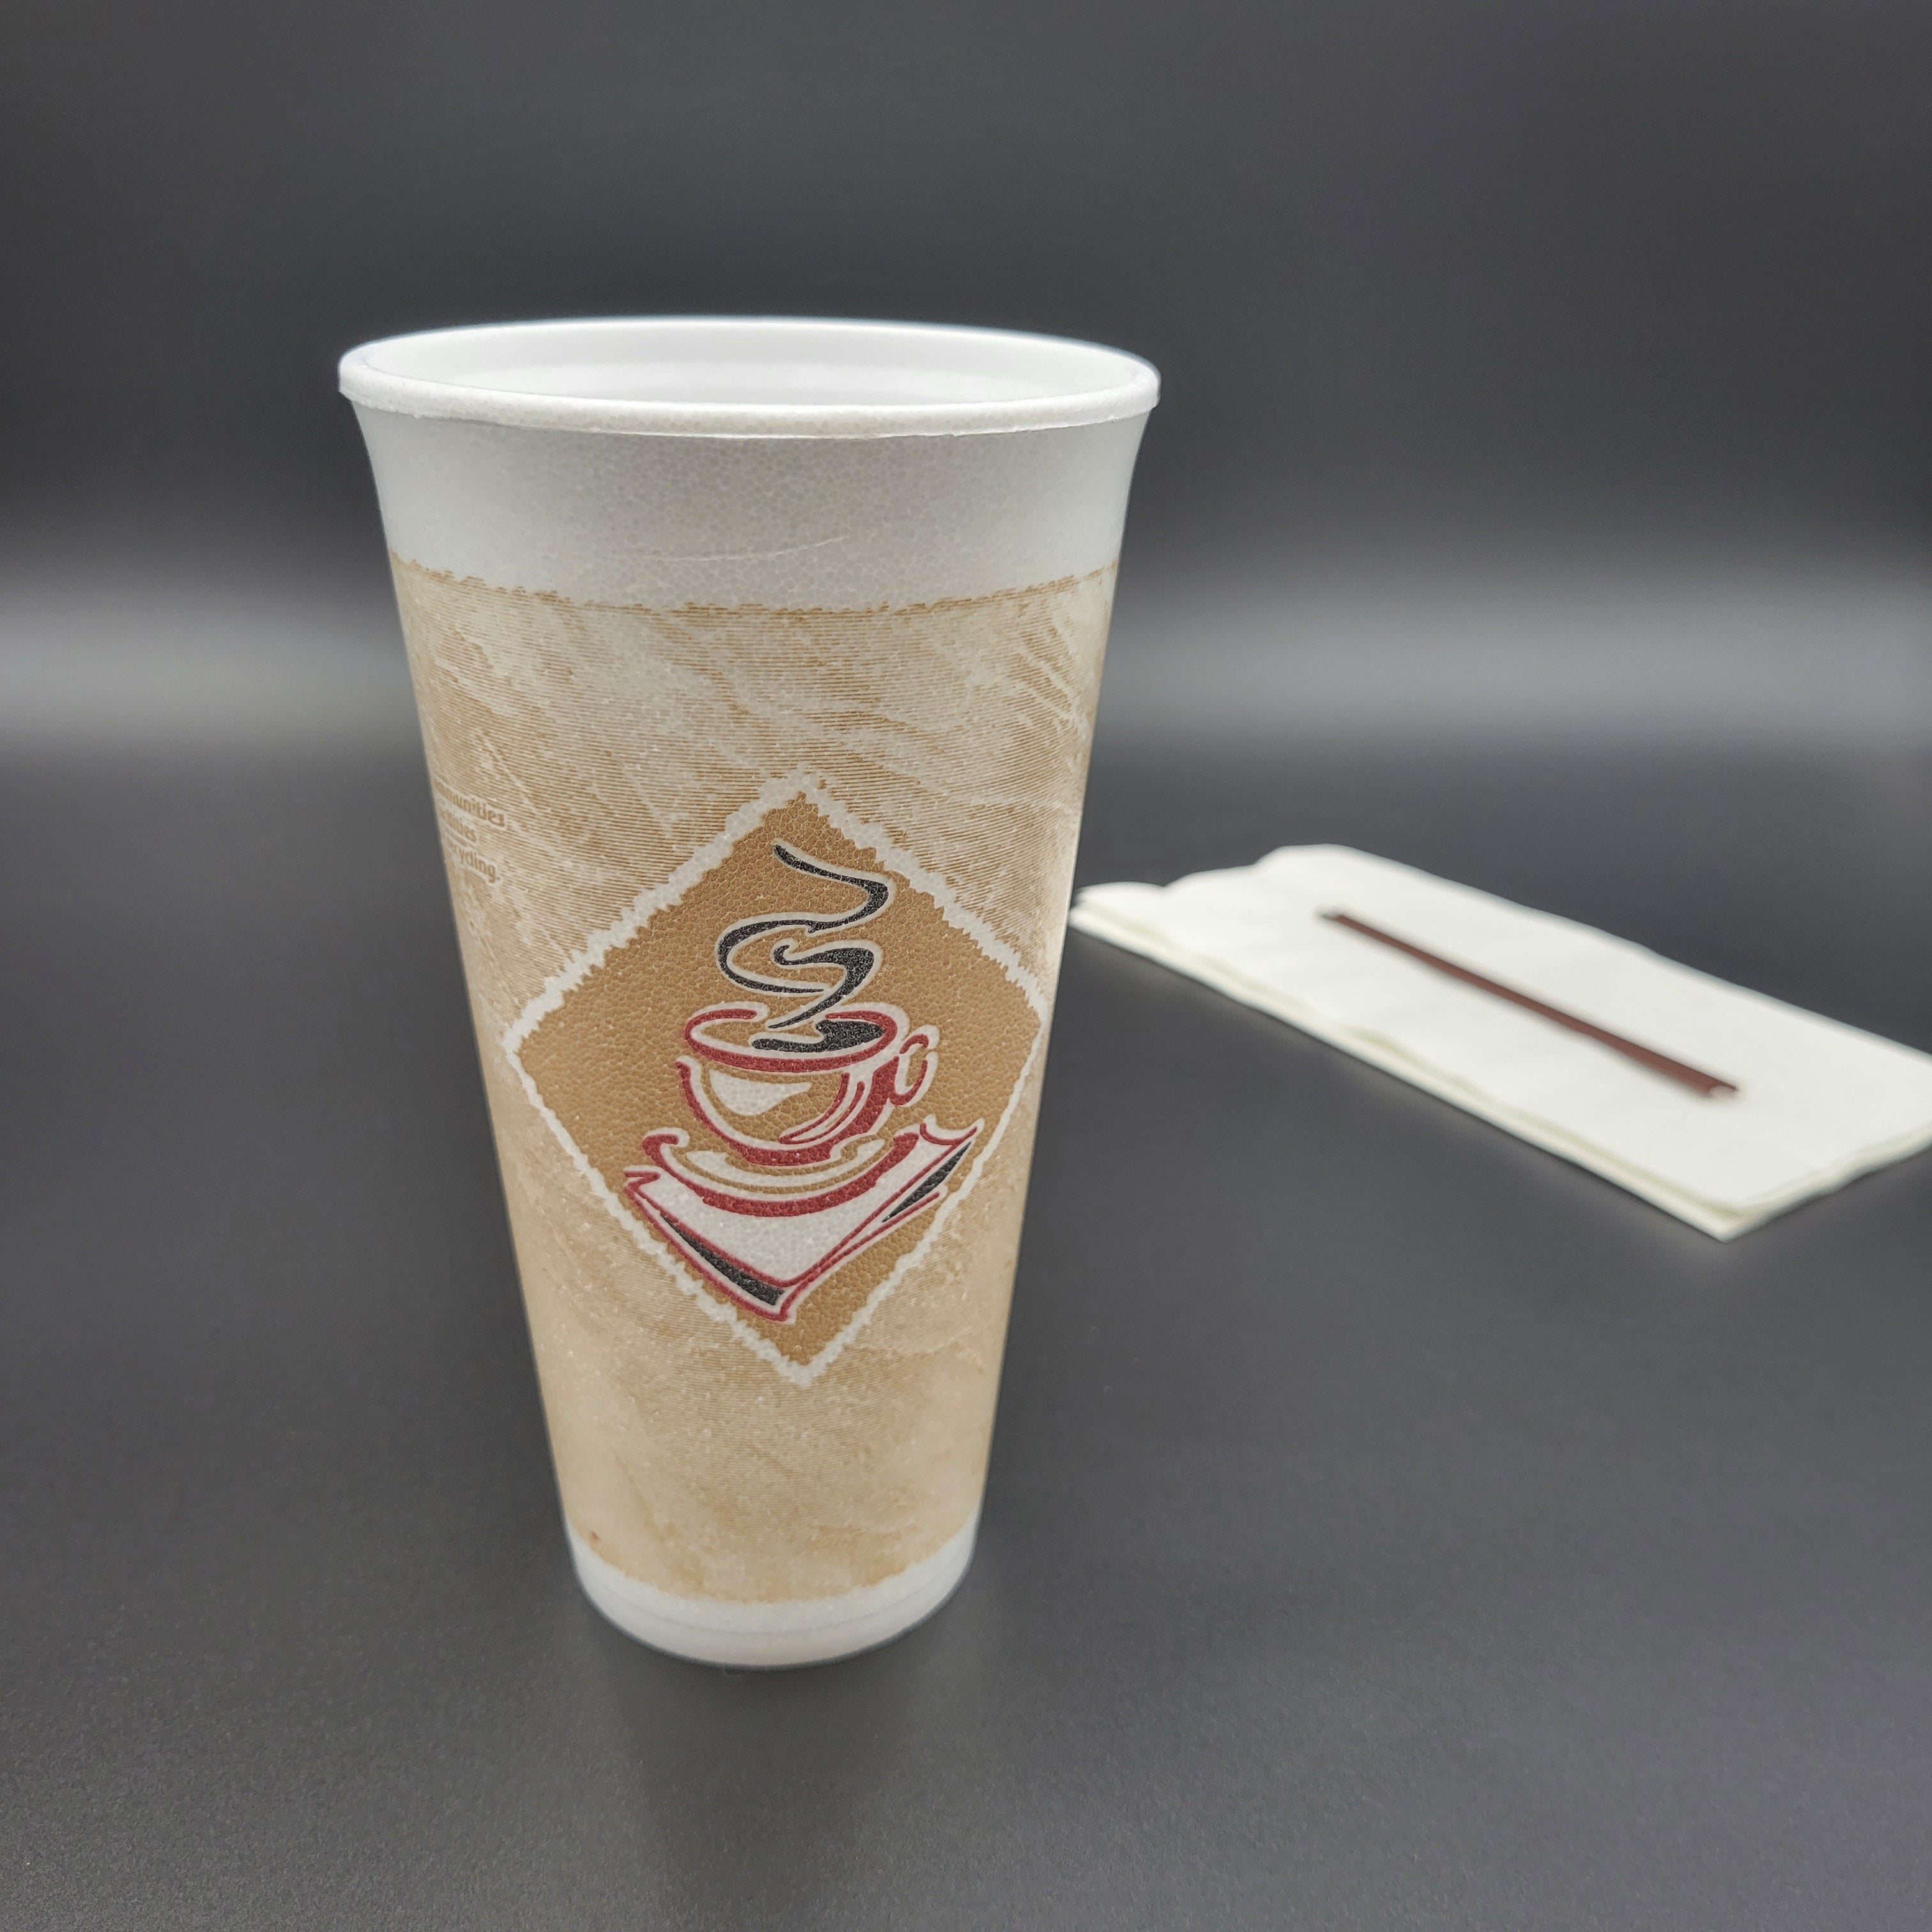 Dart Mfg. Foam Coffee Cup "Café G" Print 20 oz. 20X16G - 500/Case